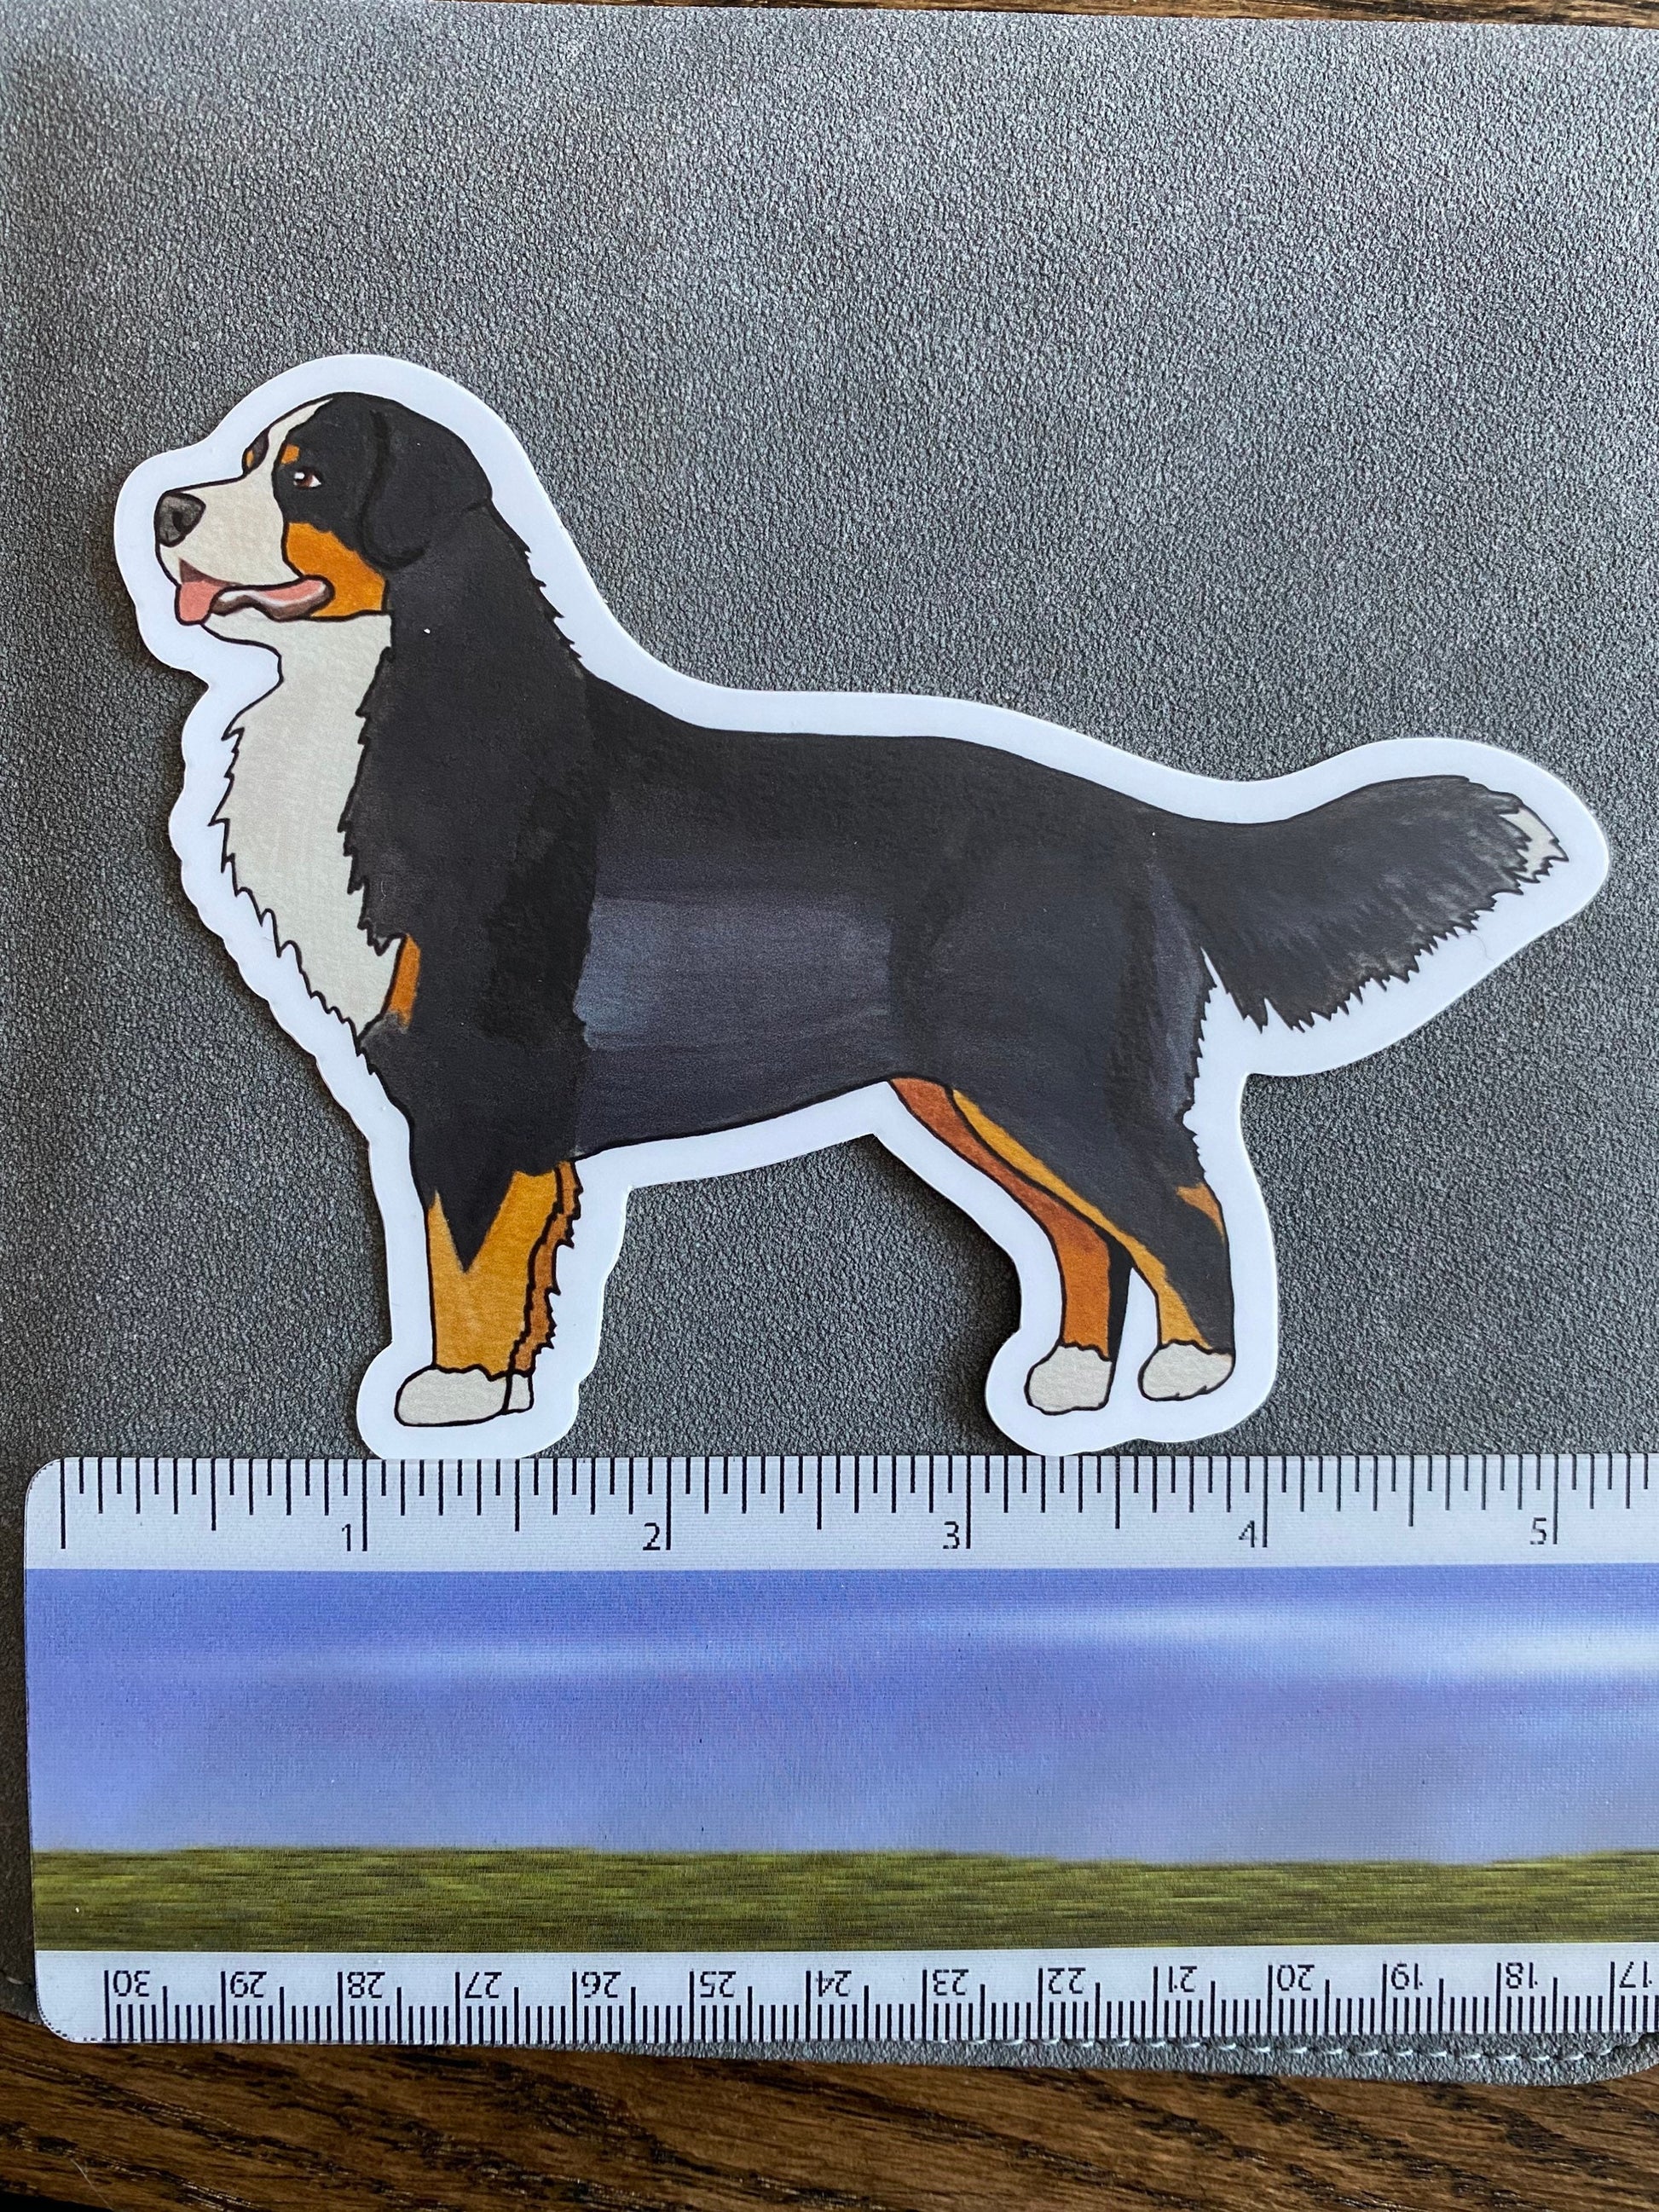 Bernese Mountain Dog Berner Standing Stacked 5" Die Cut Vinyl Sticker Decal: Durable Matte-Finish